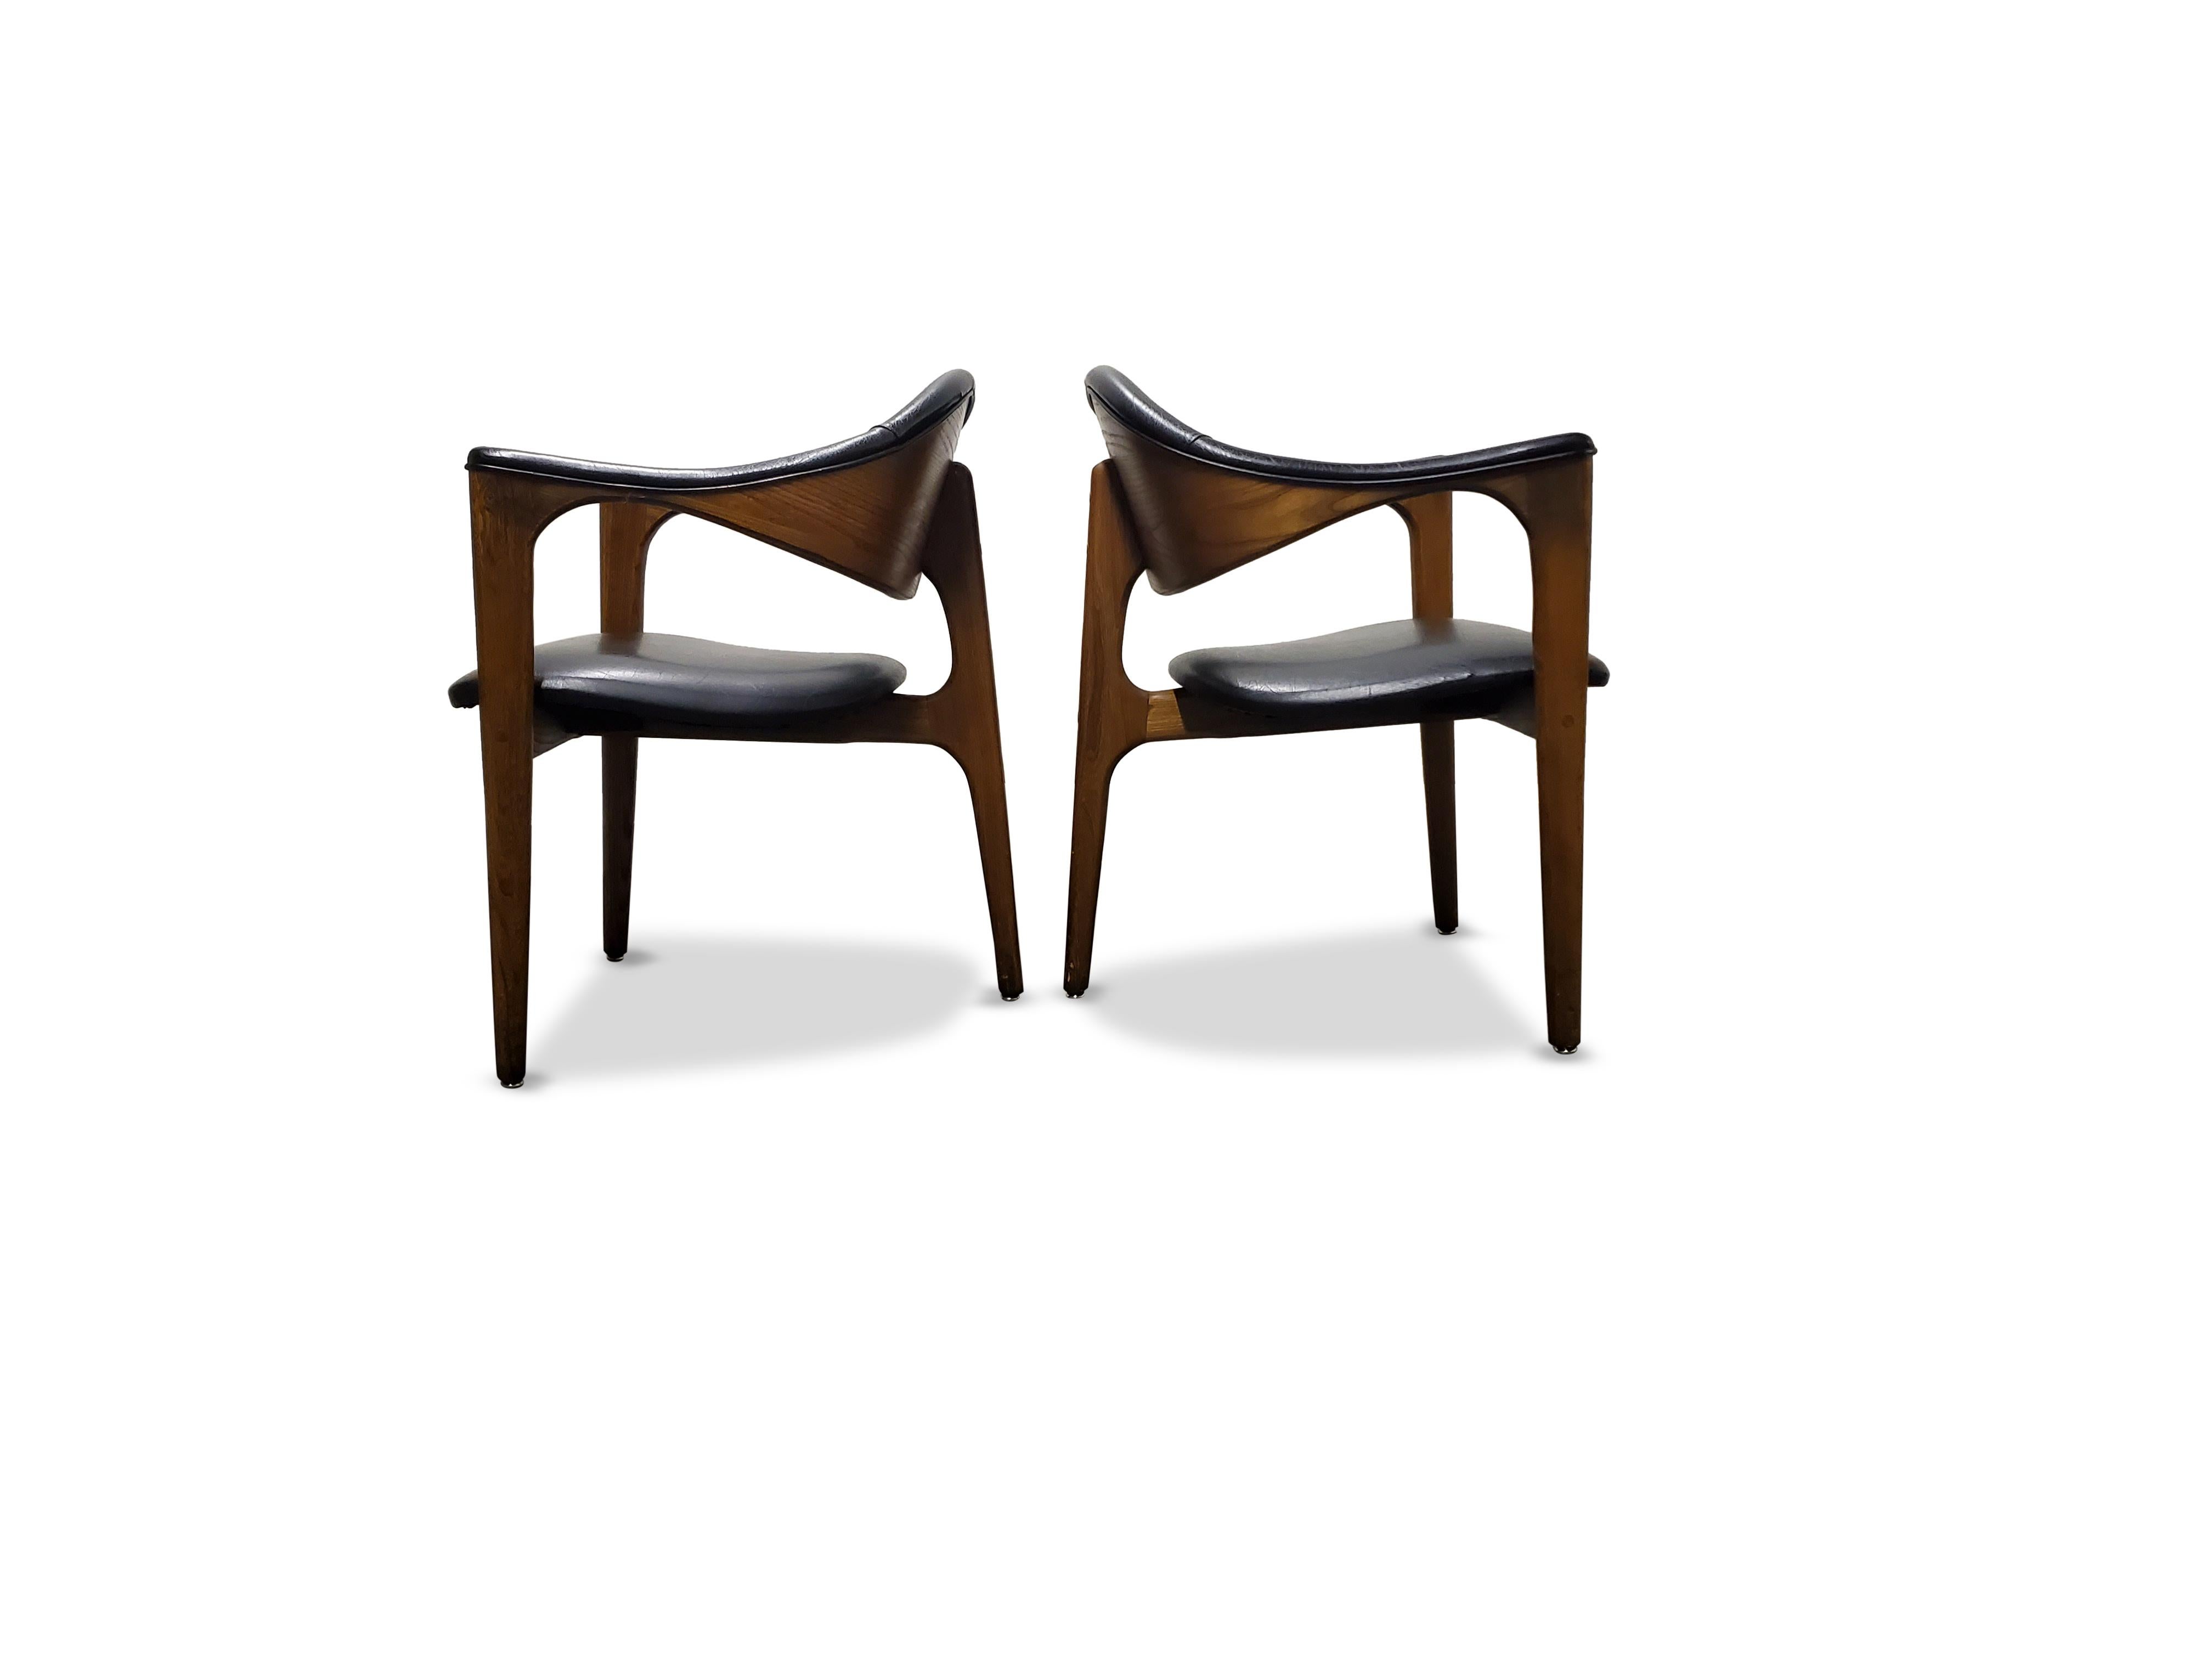 Upholstery Pair of Mid-Century Modern Three-Legged Chairs